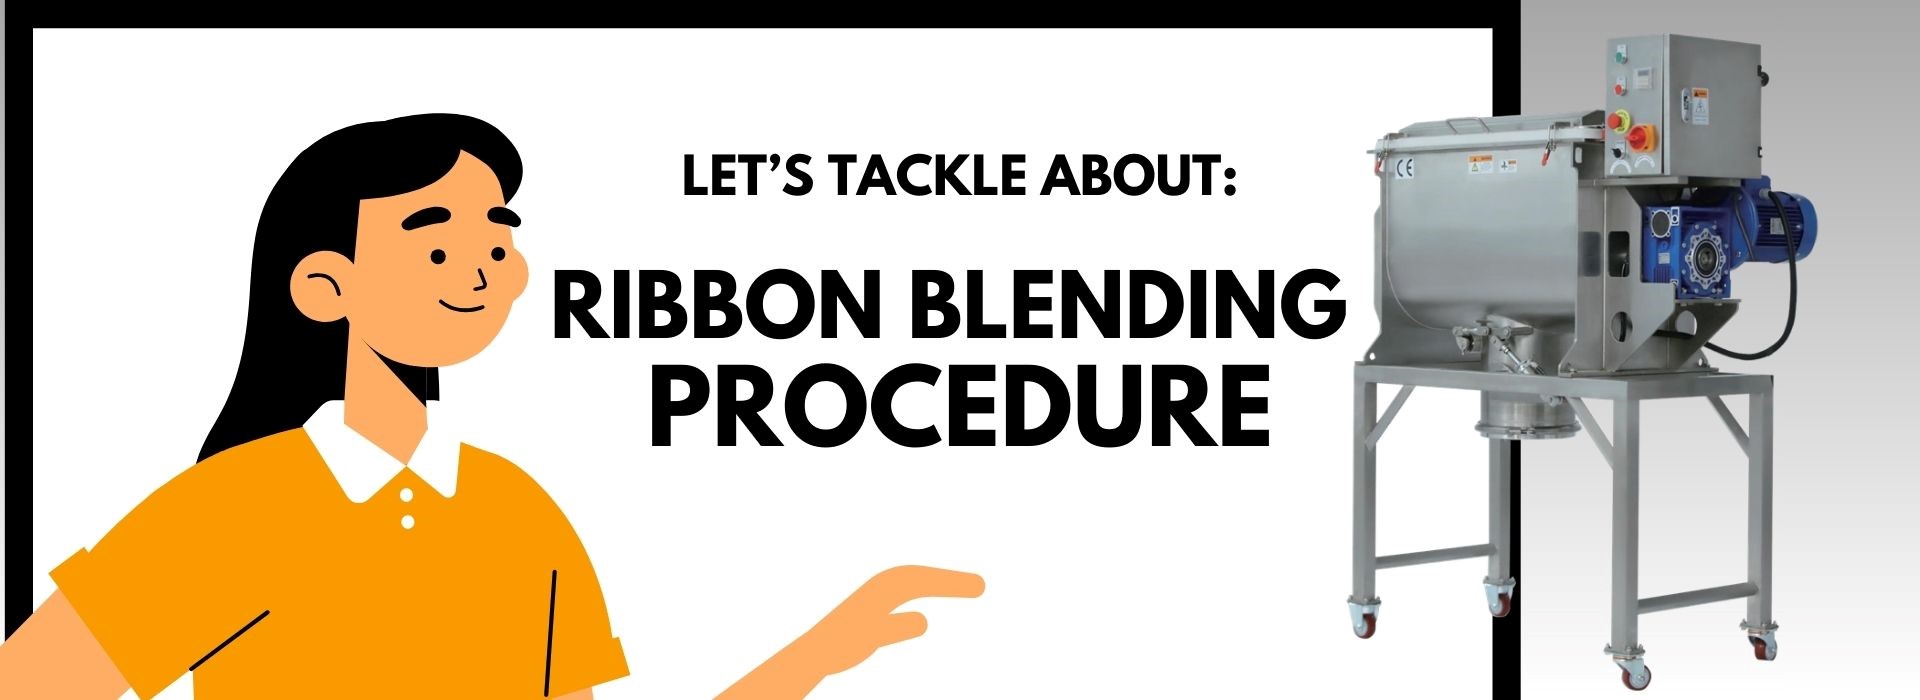 Ribbon Blending Procedure1